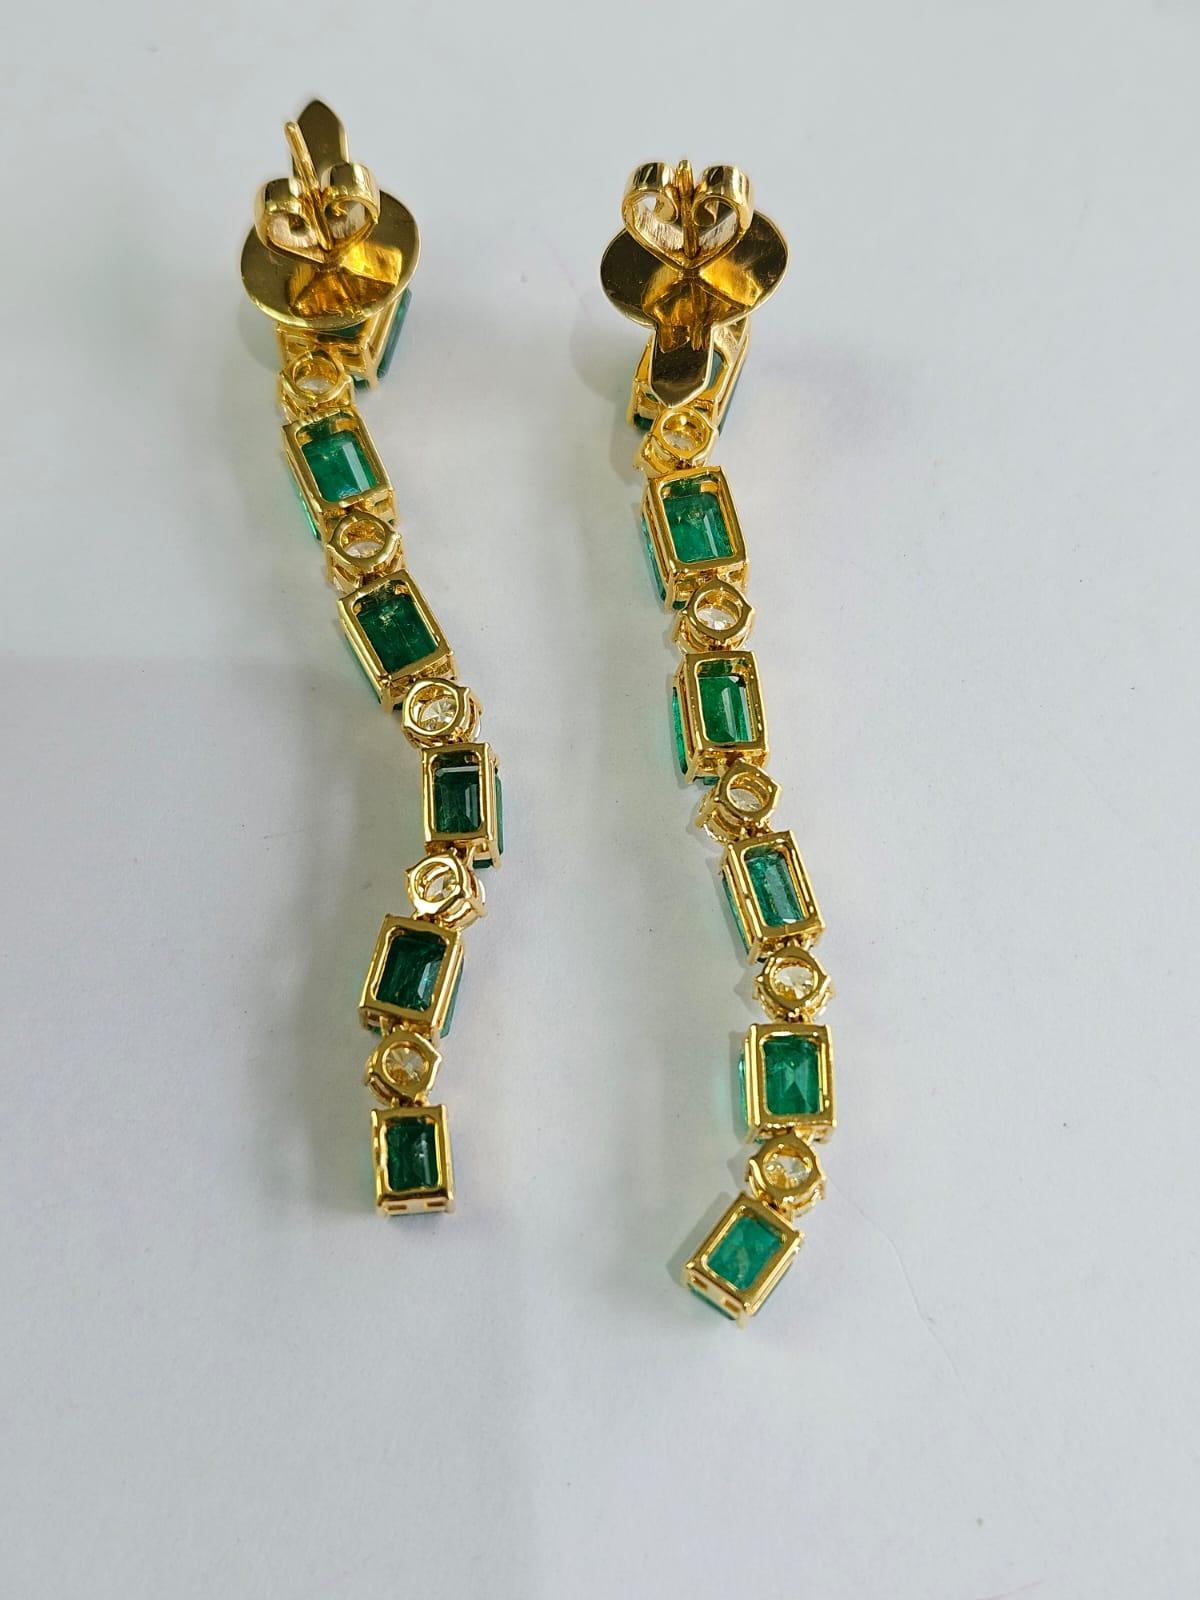 10.22 carats natural Zambian Emerald & Diamonds Chandelier Earrings in 18K Gold For Sale 1